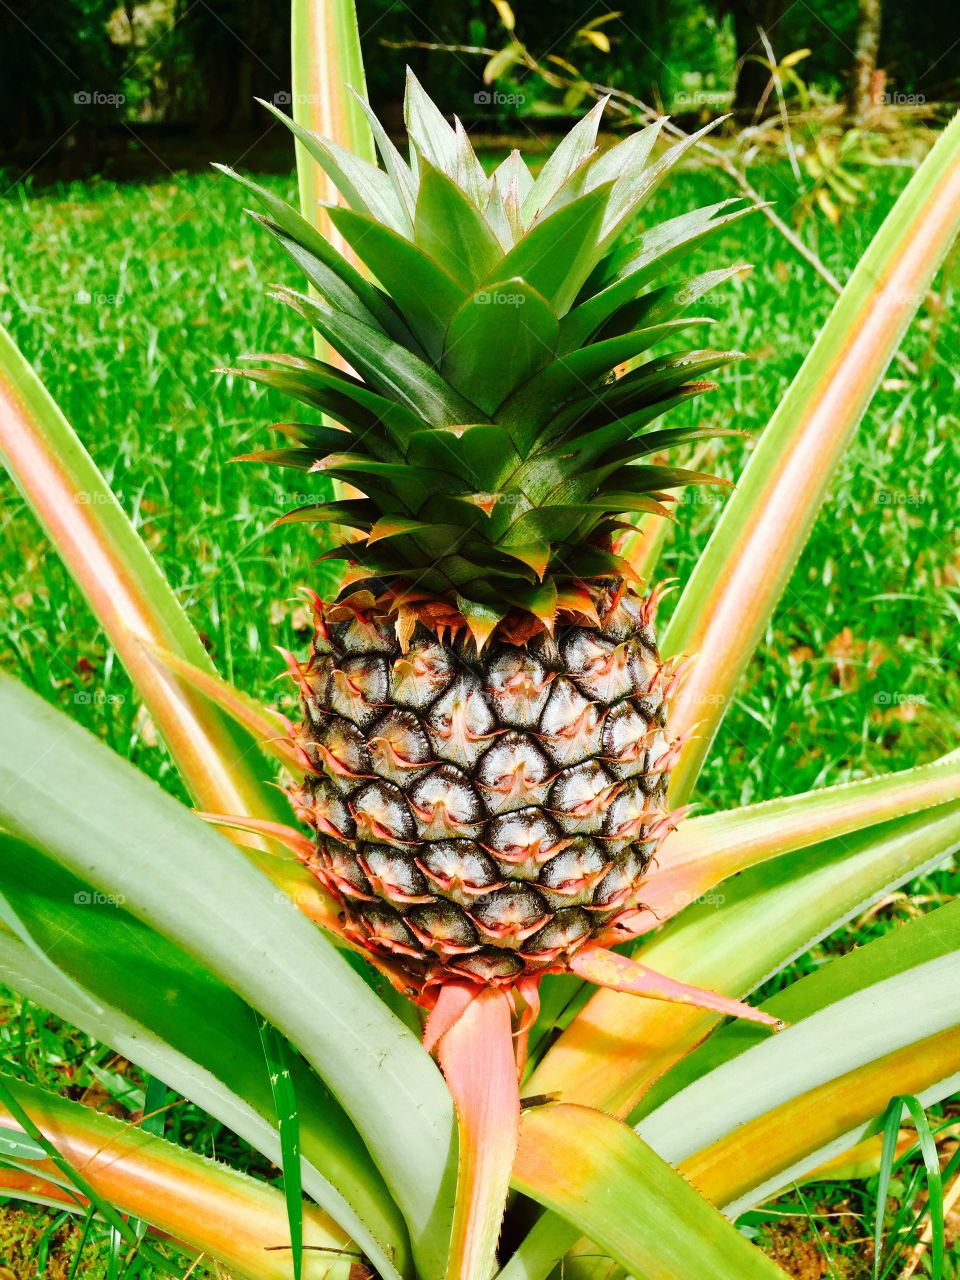 Baby pineapple
